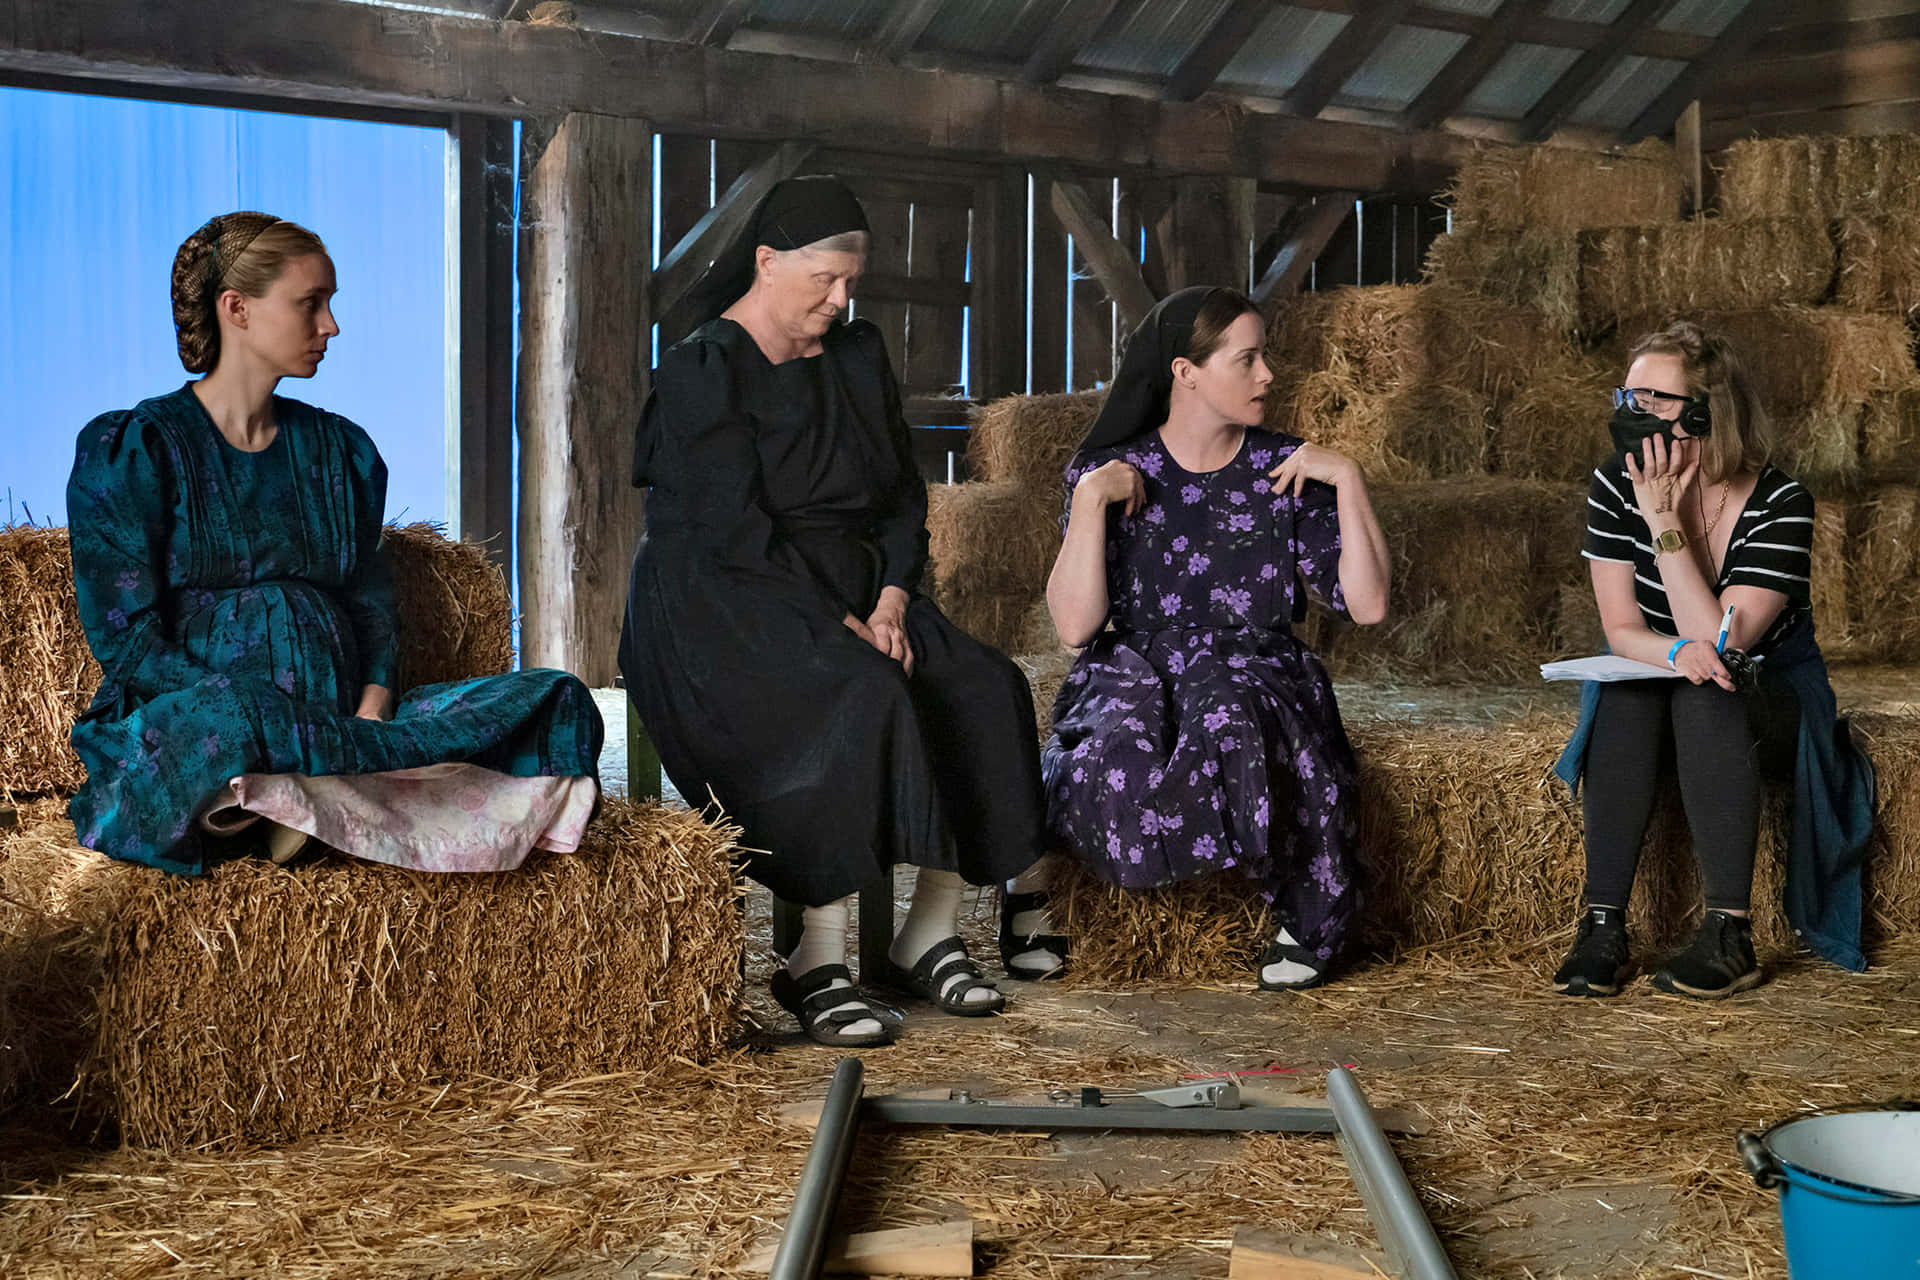 Four Women Sitting On Hay In A Barn